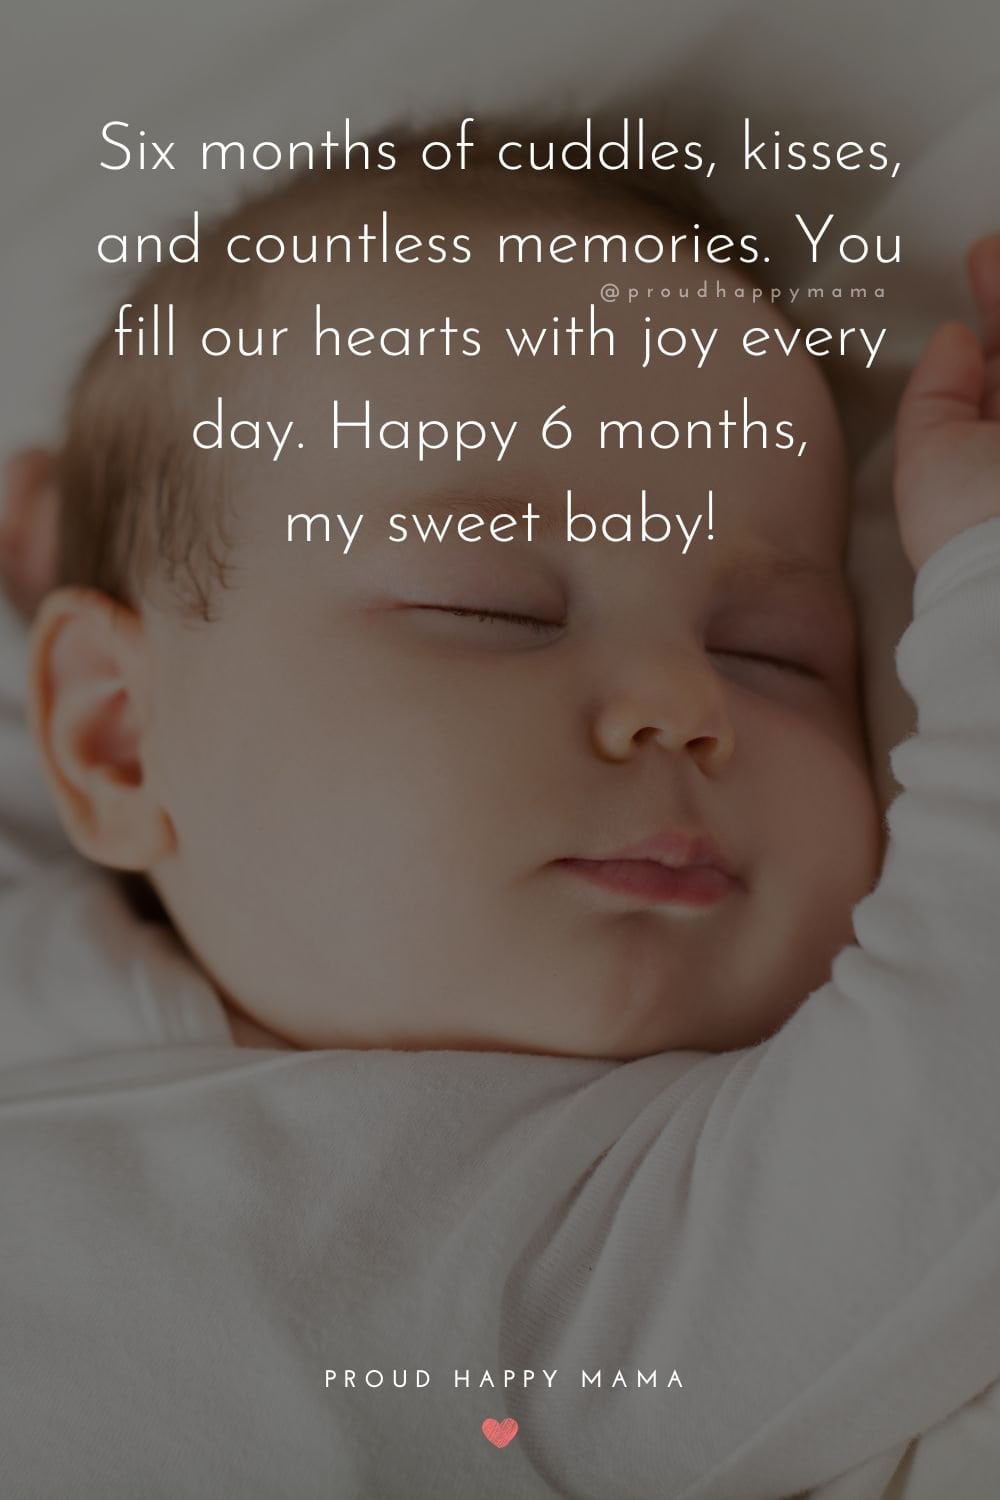 Happy 6 months wishes